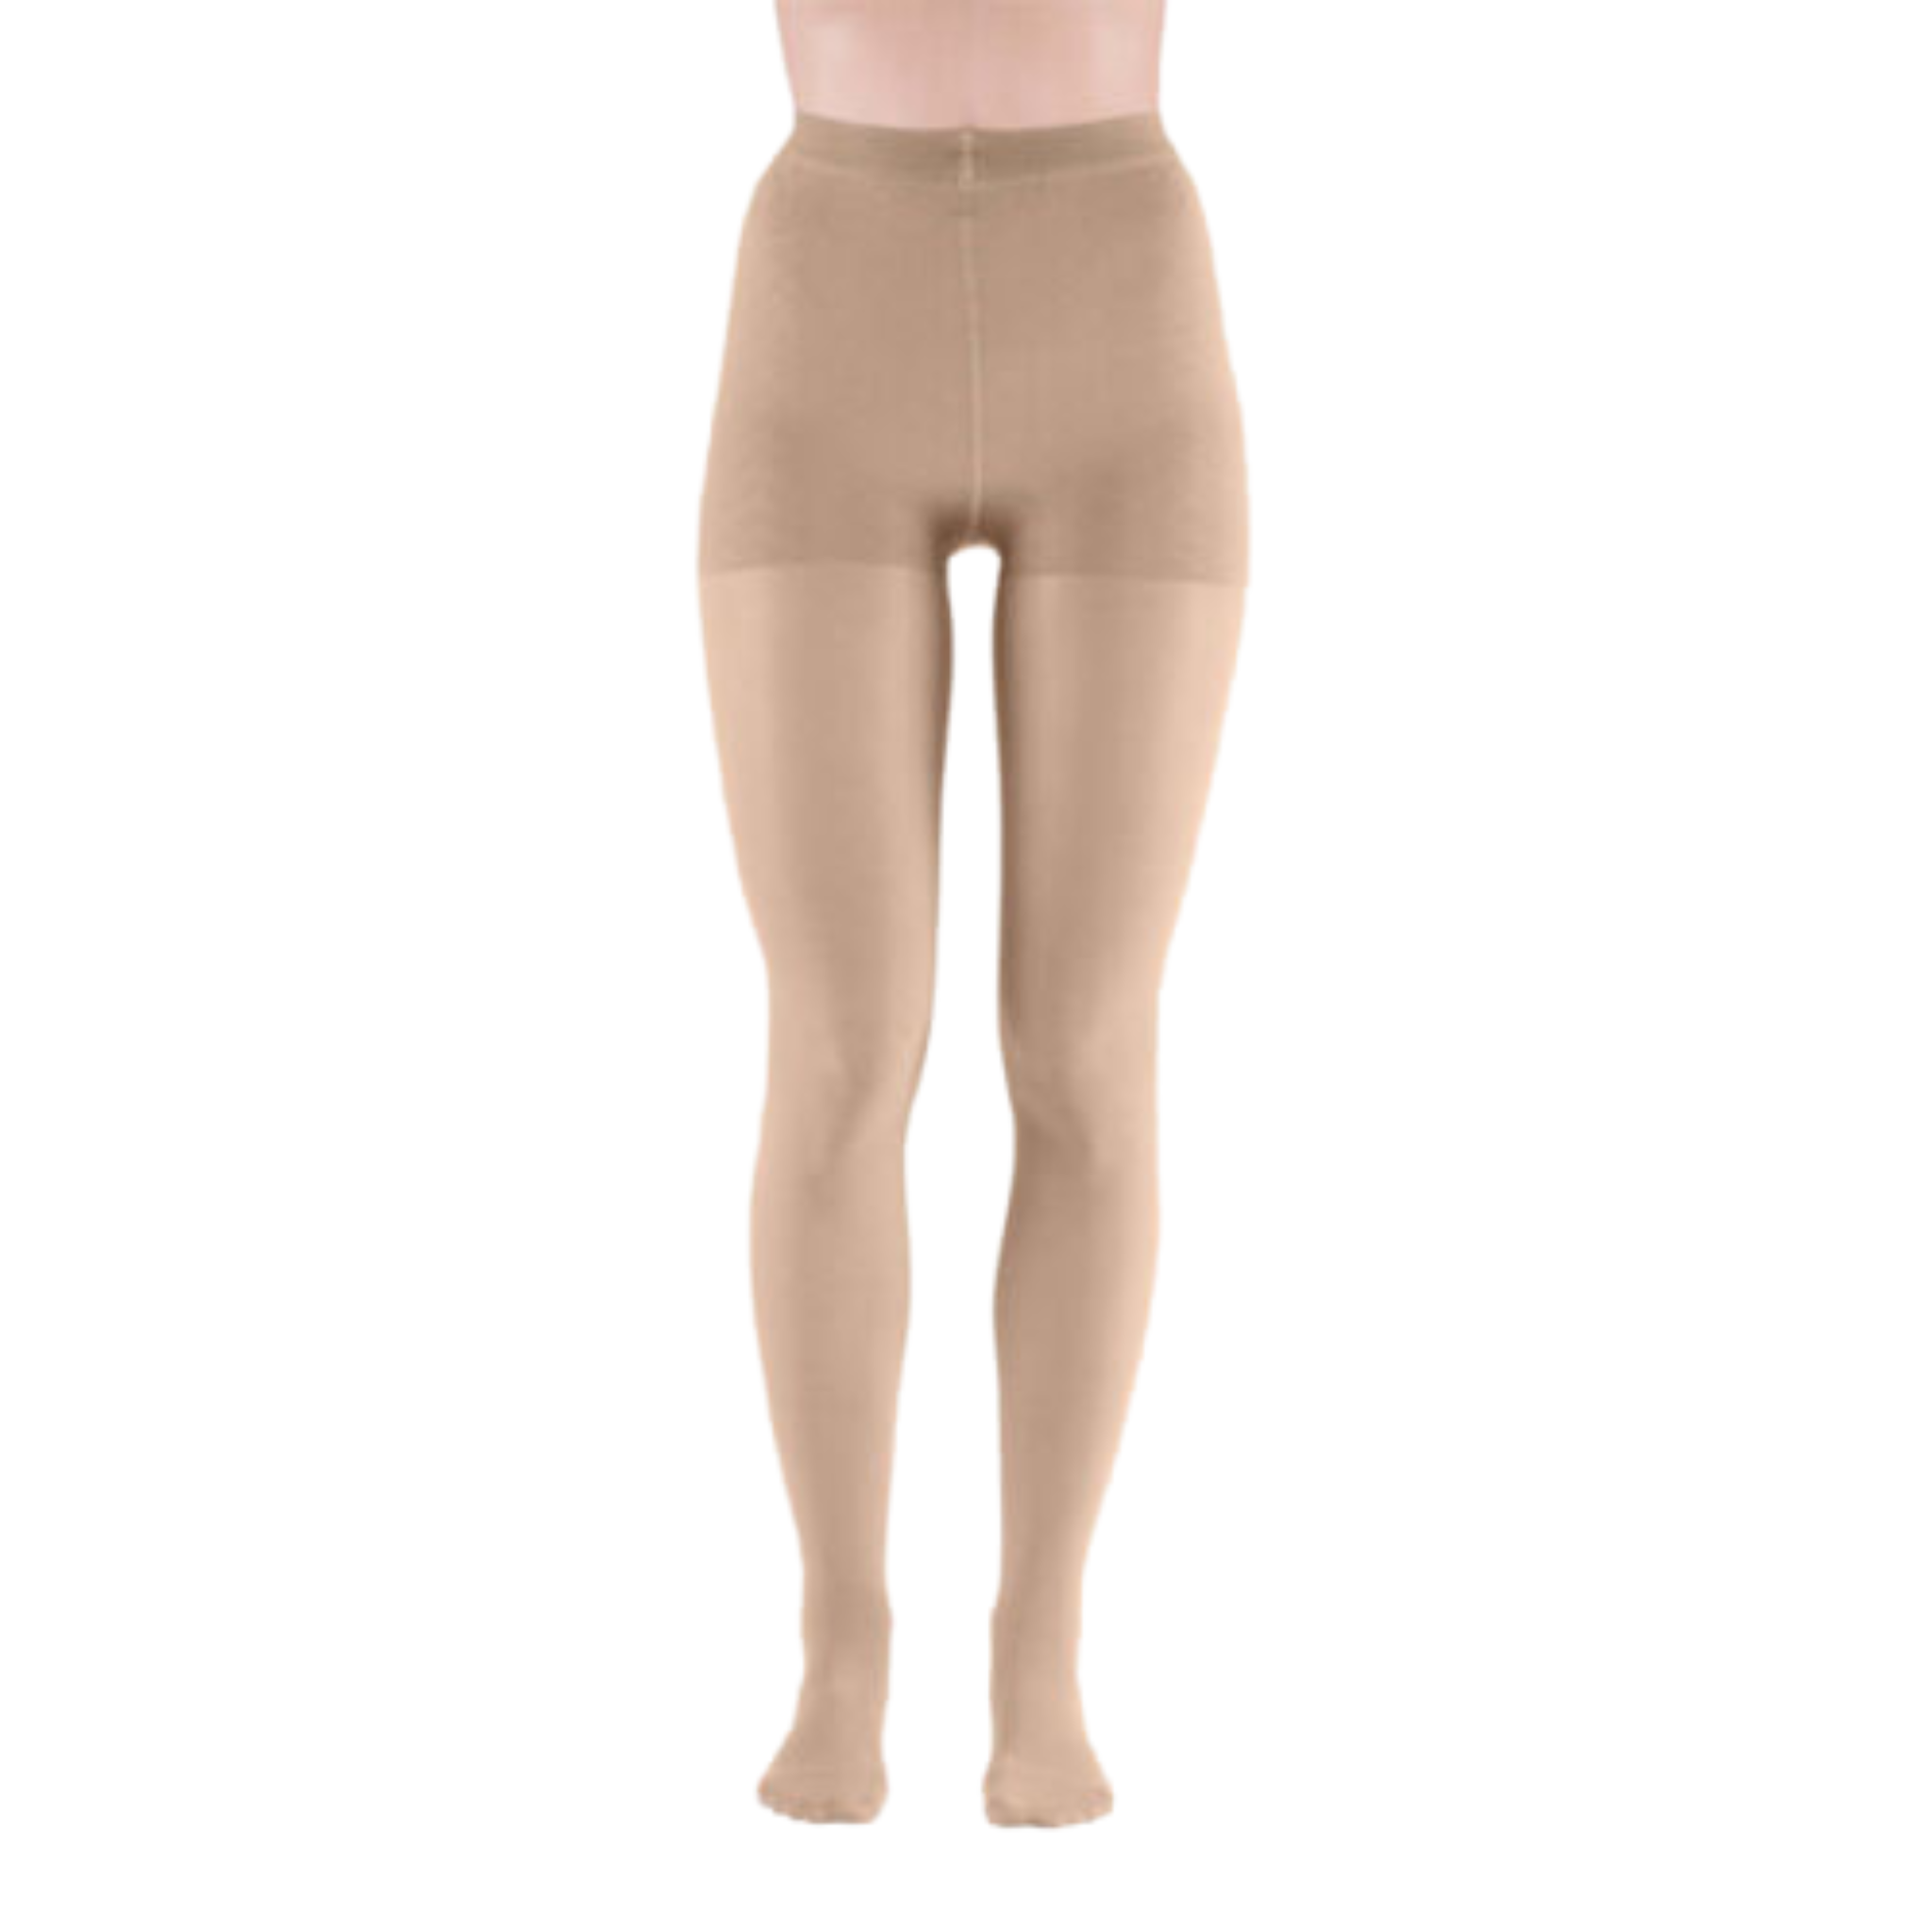 Compression Stockings | Pantyhose | Closed Toe | Beige | mediven elegance®